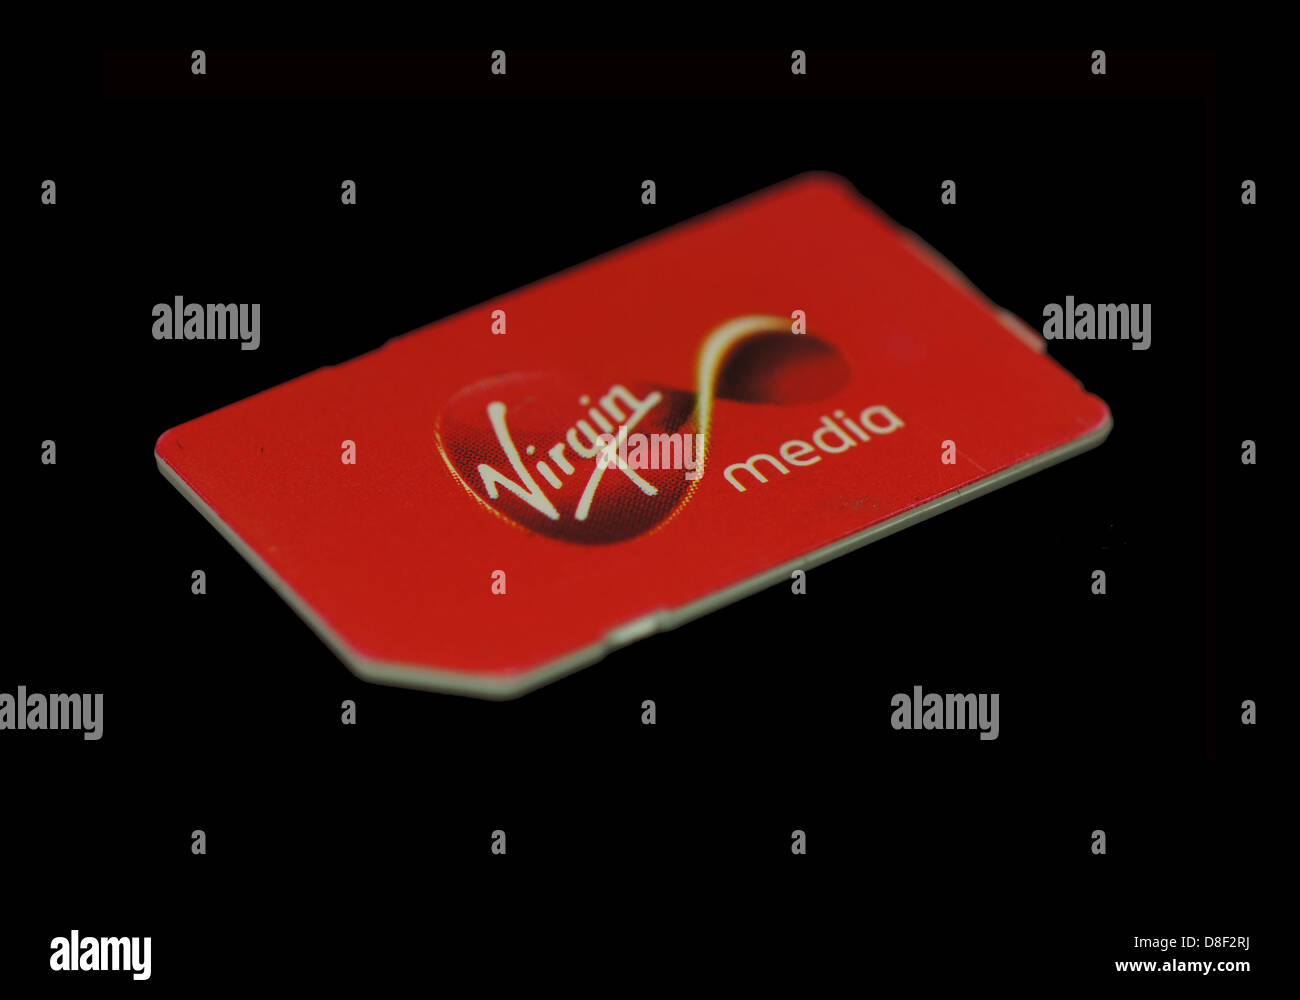 Virgin media sim card Stock Photo - Alamy